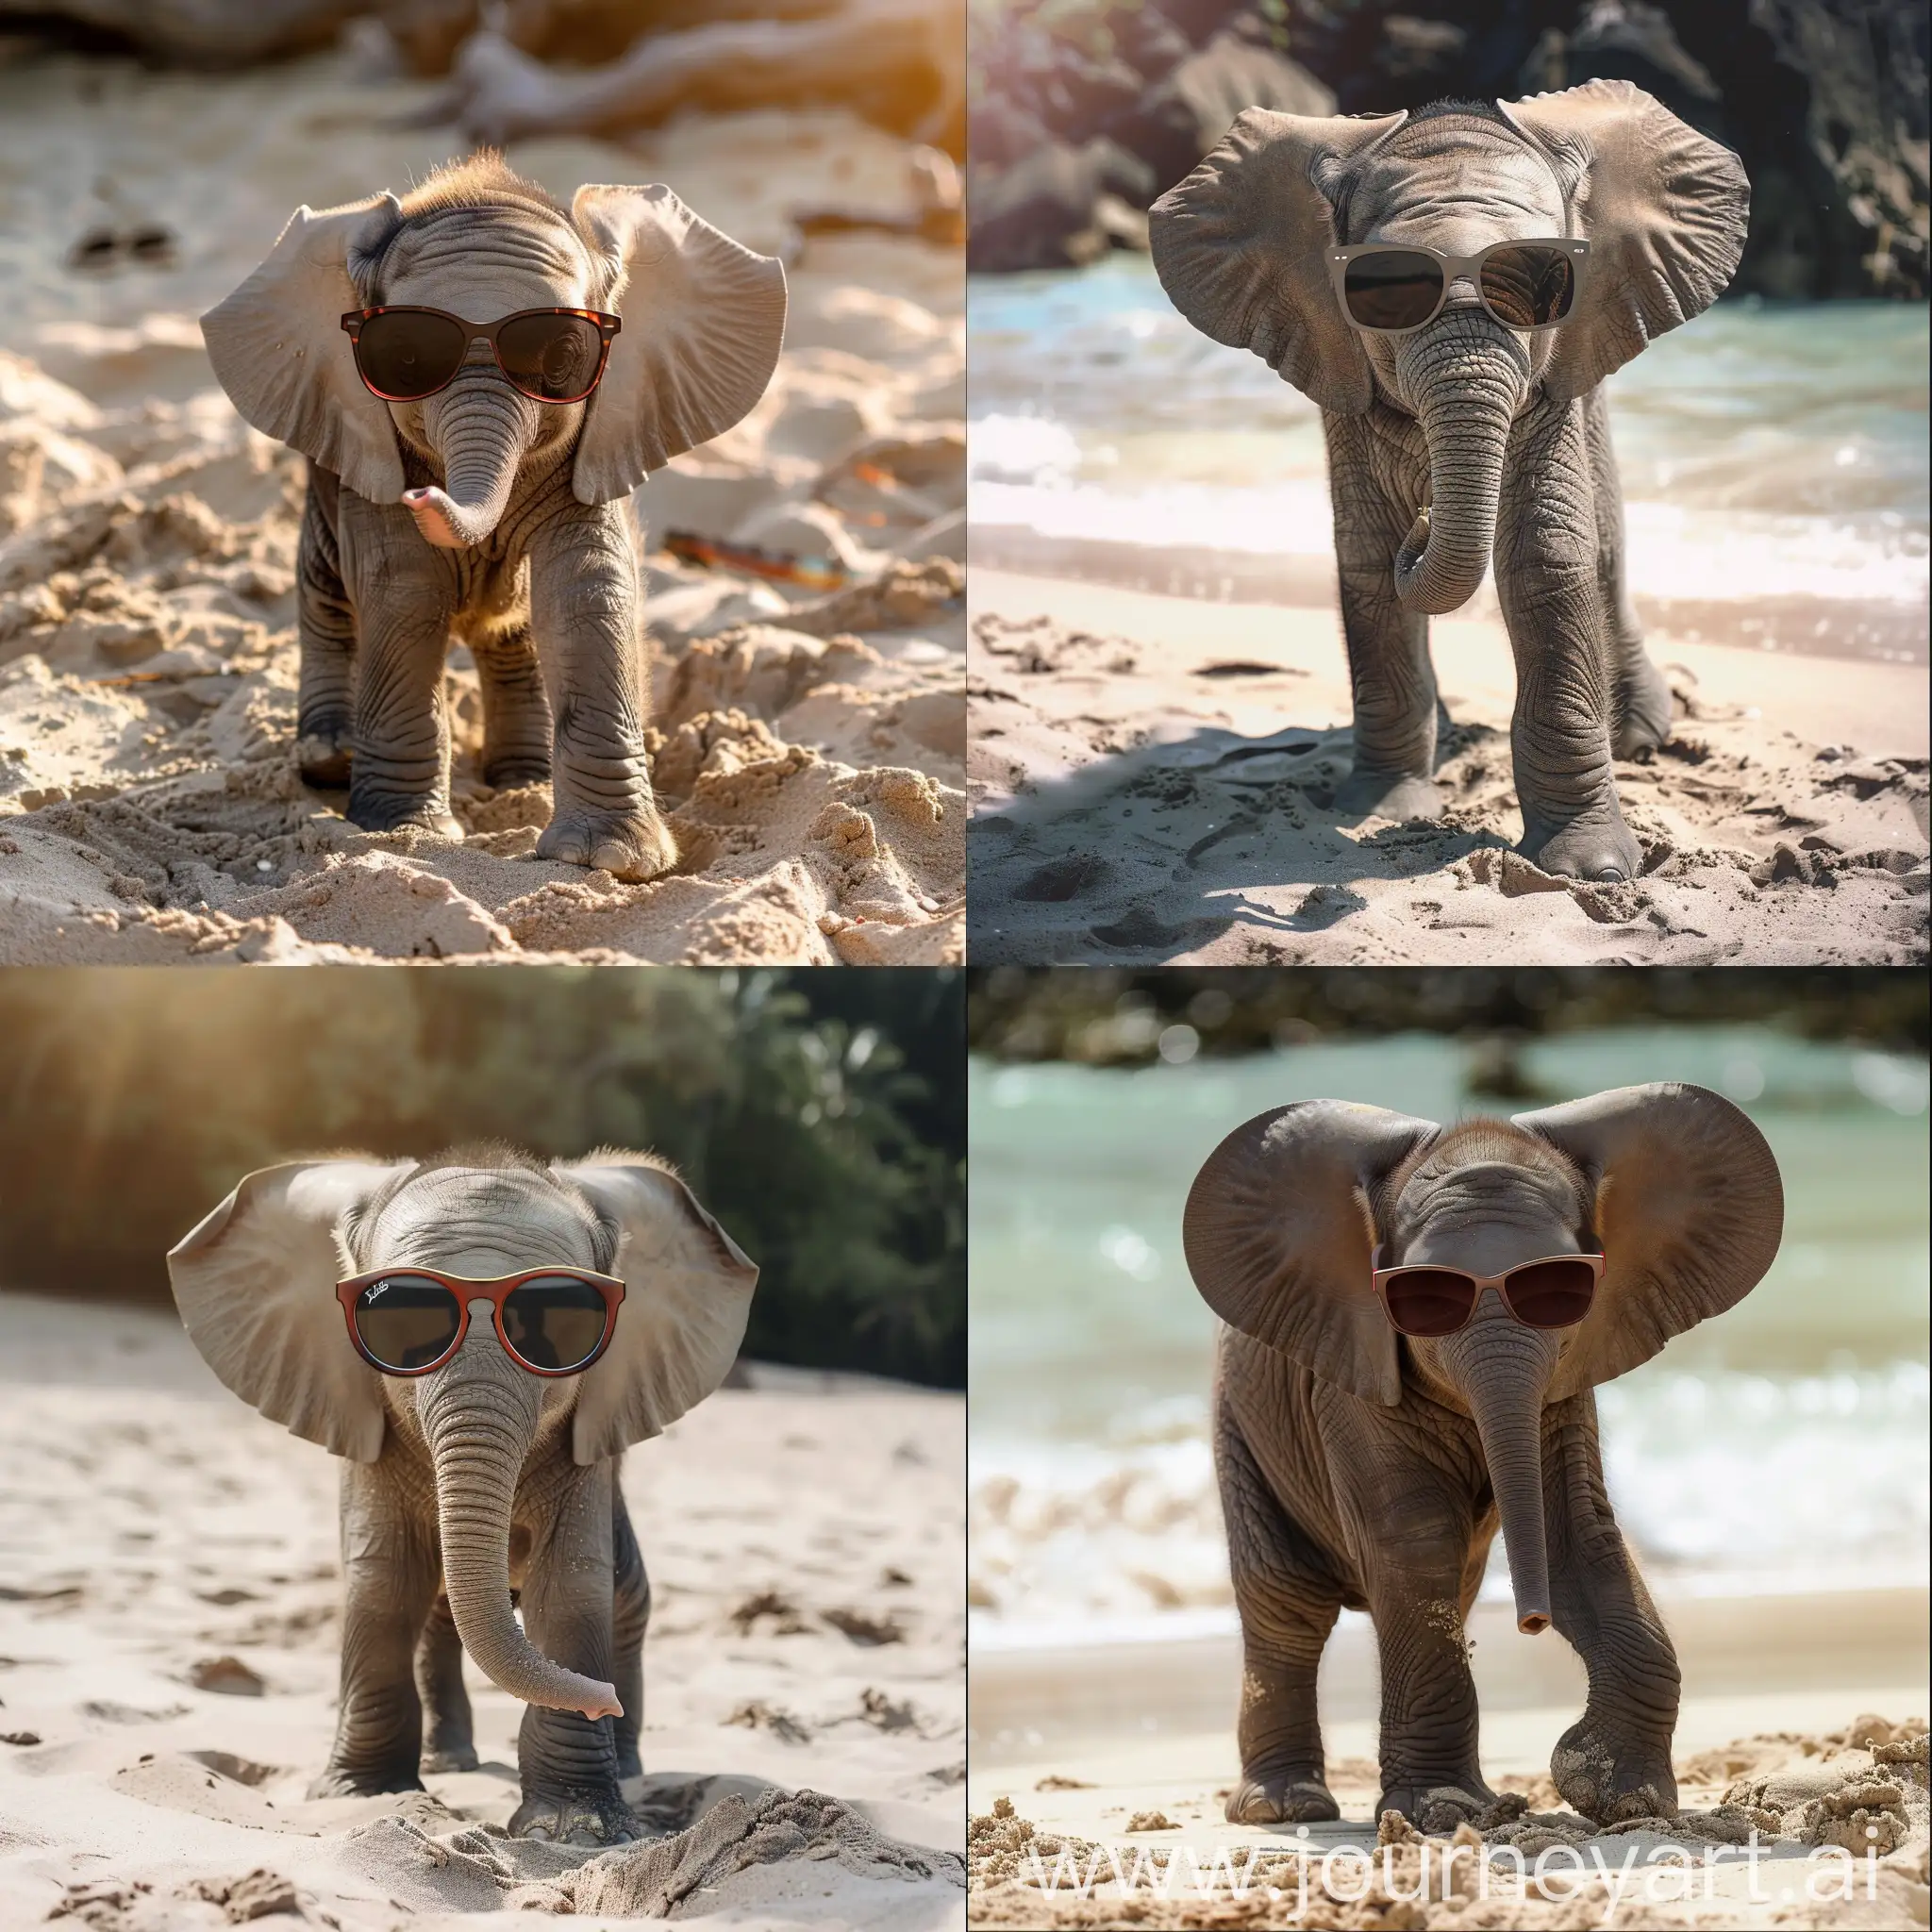 Cool-Baby-Elephant-Enjoying-Hawaii-Beach-with-Sunglasses